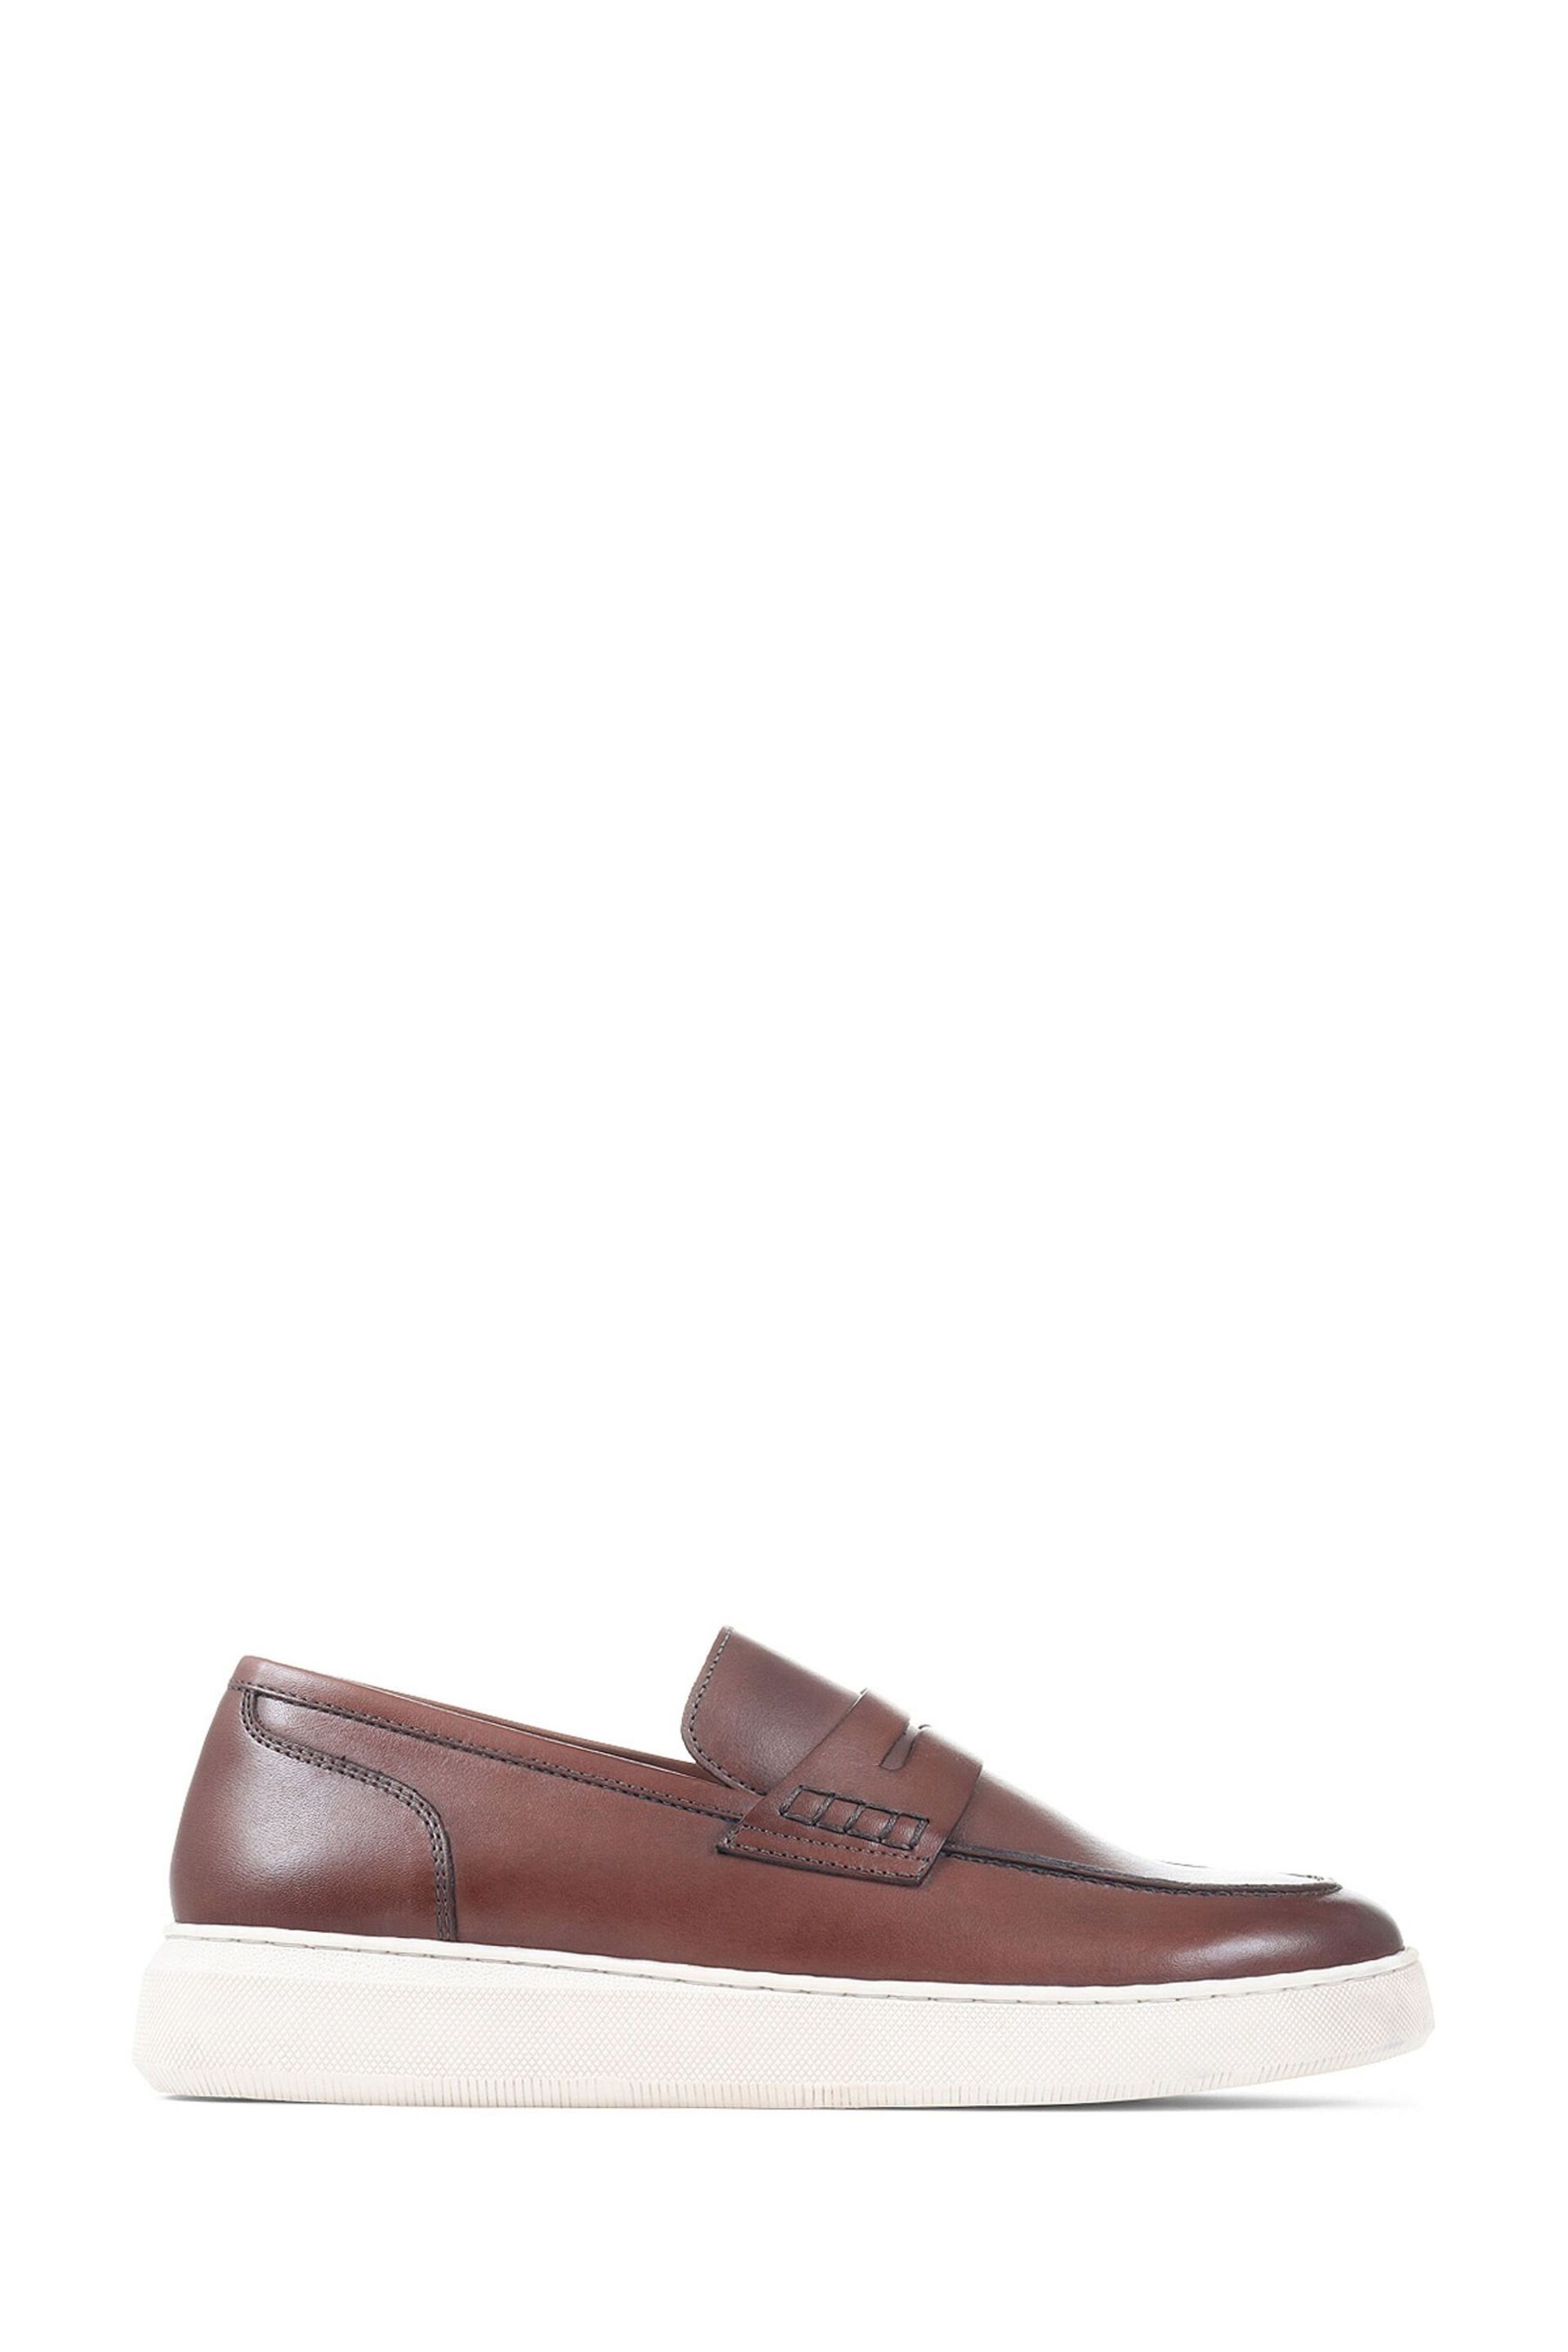 Jones Bootmaker Sal Leather Slip-on Brown Loafers - Image 1 of 5